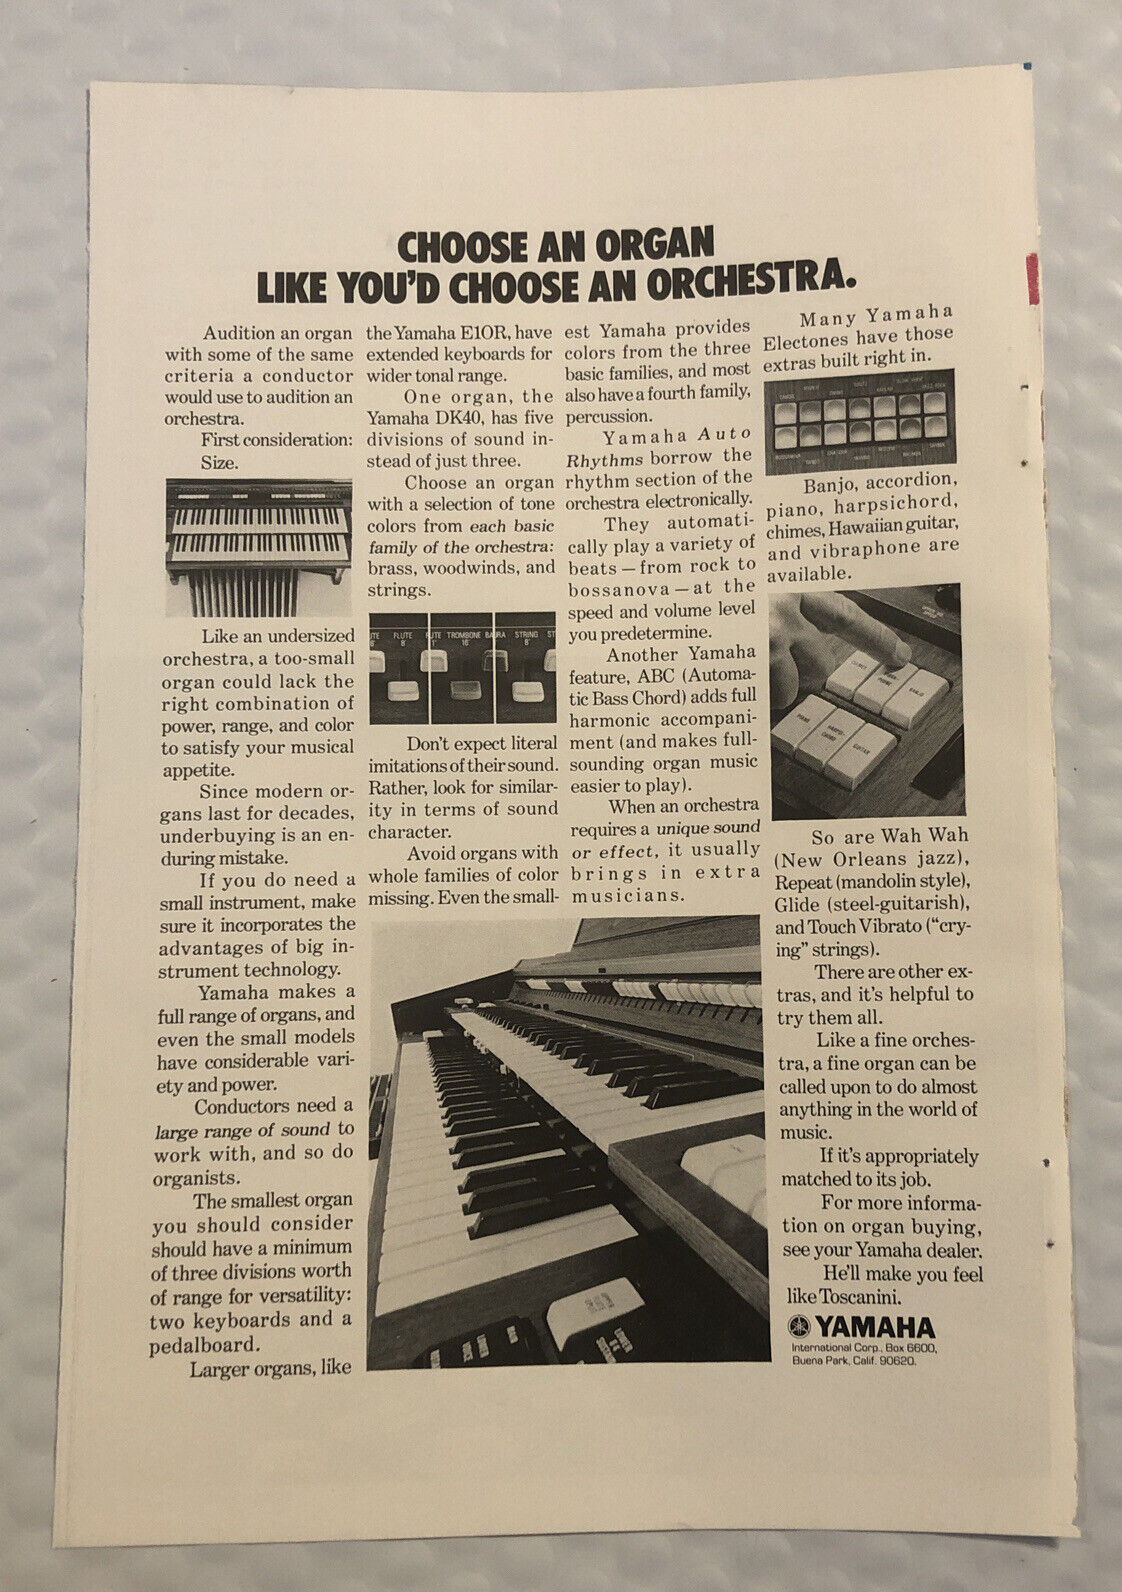 Vintage 1973 Yamaha Original Print Ad - Full Page - Choose An Orchestra